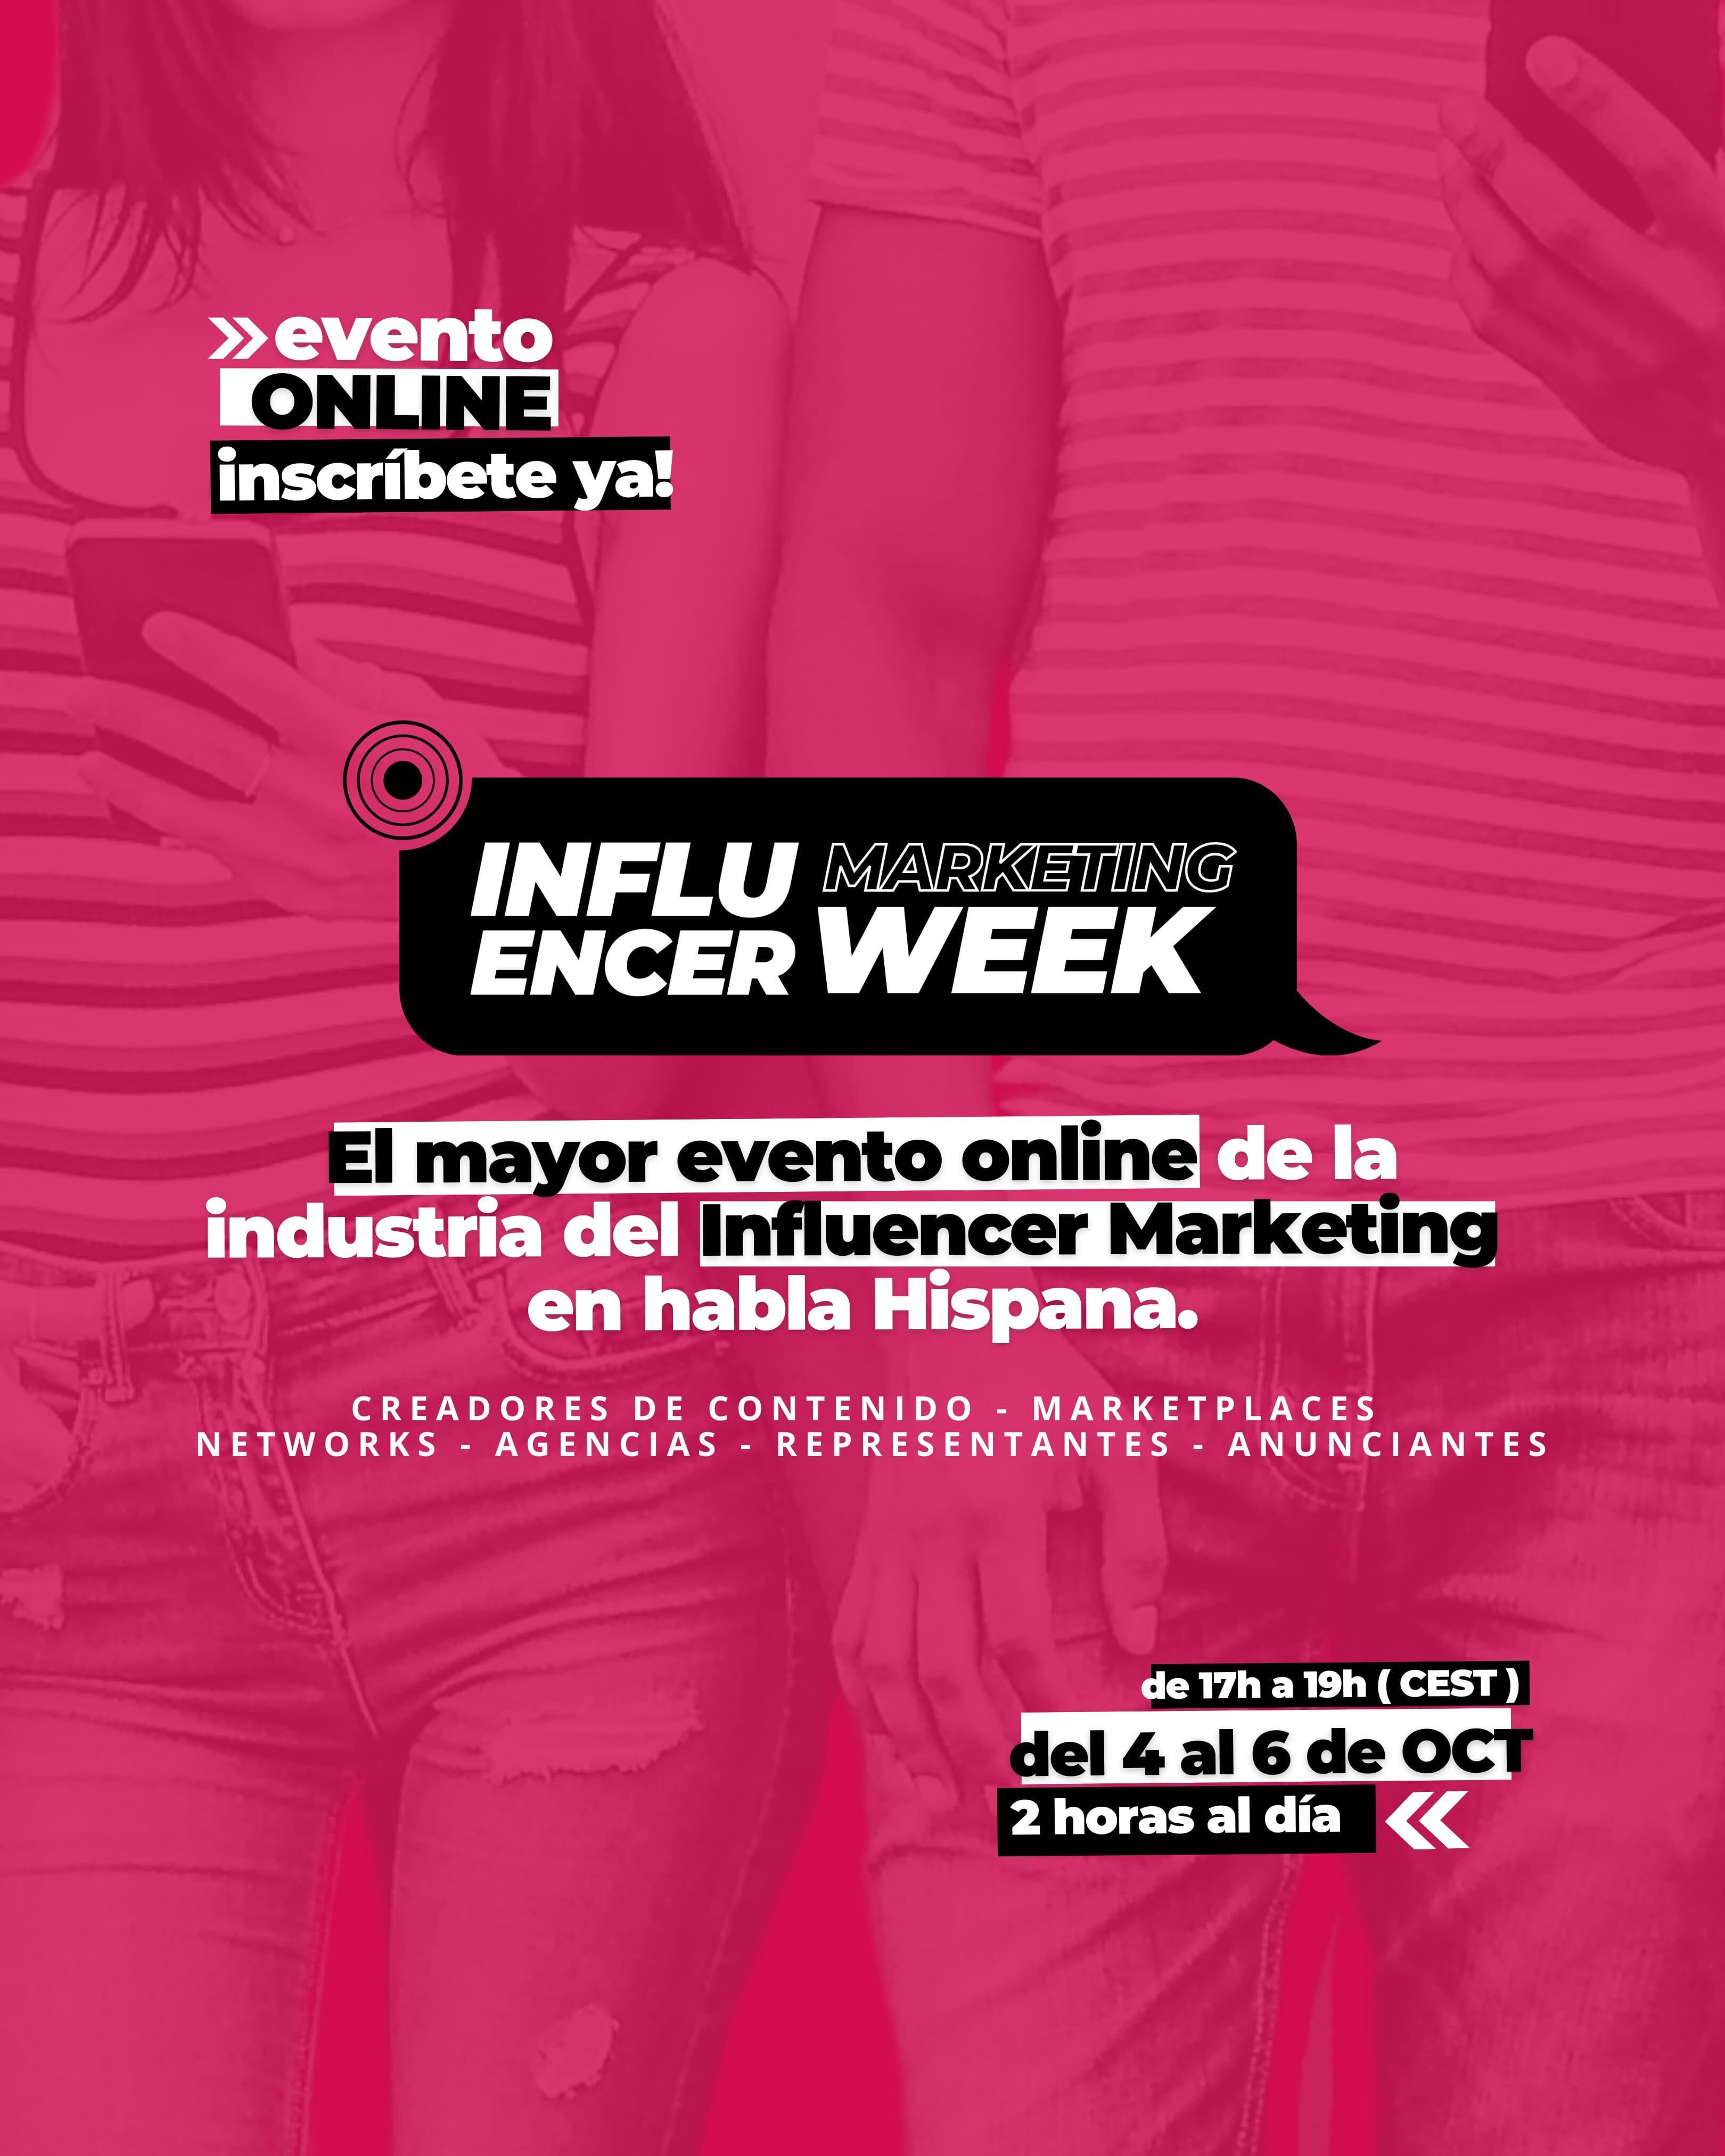 Llega la #IMWeek21, el mayor evento de Influencer Marketing en habla hispana